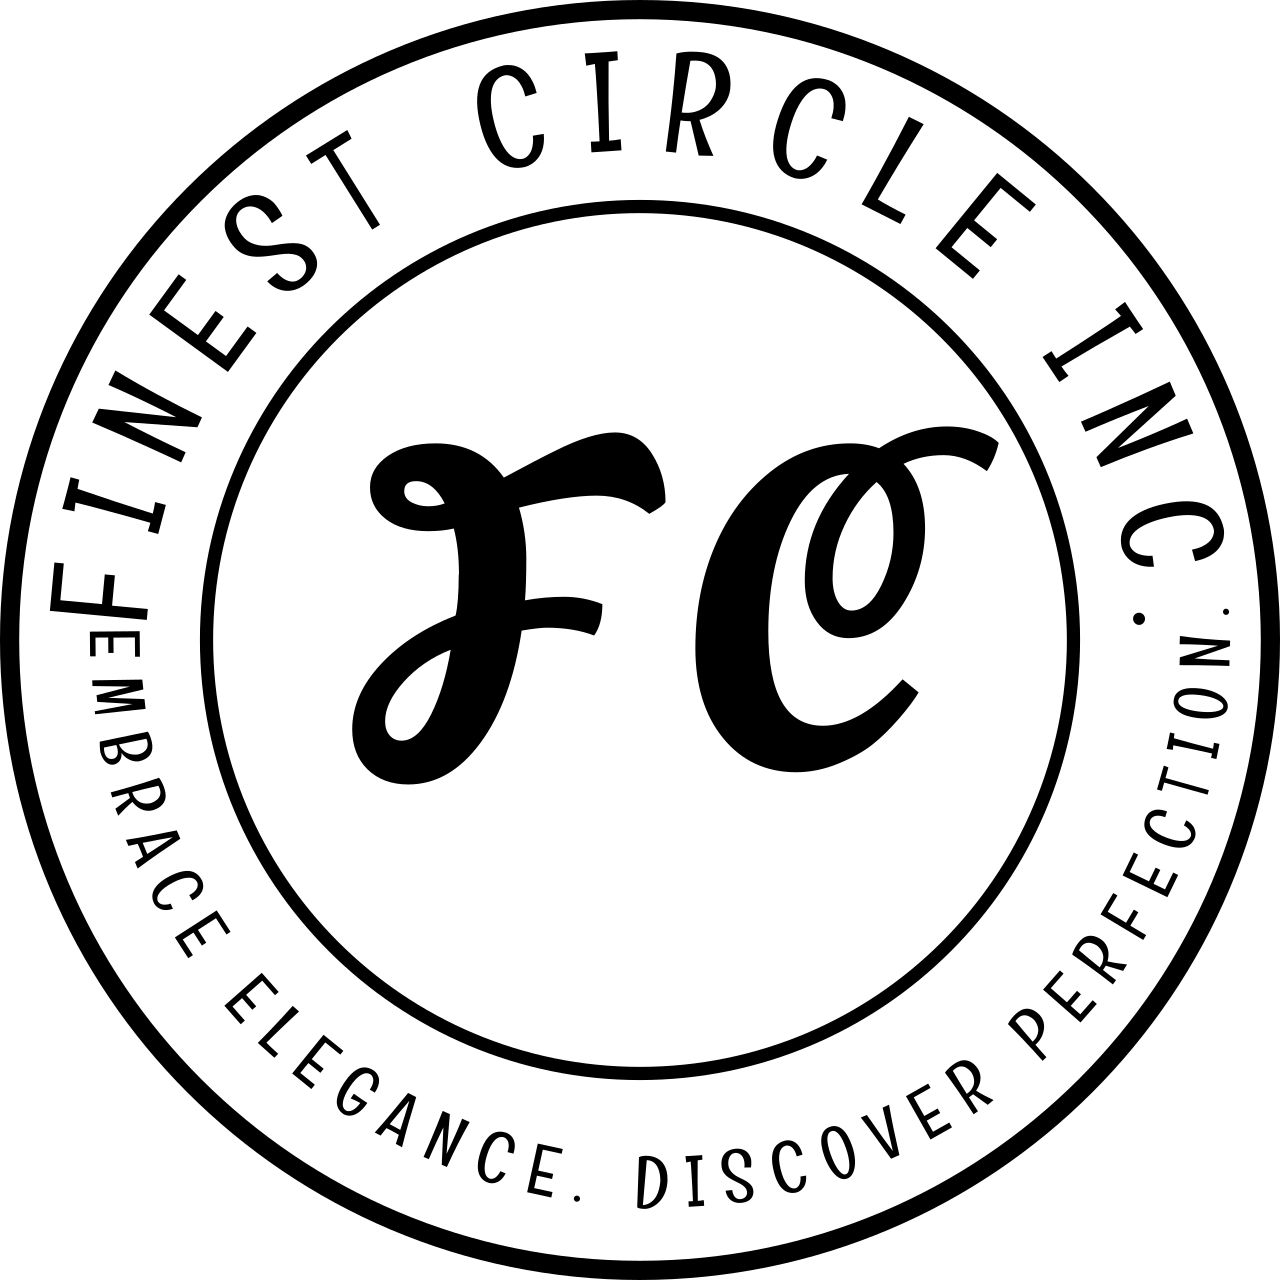 FINEST CIRCLE INC.'s logo